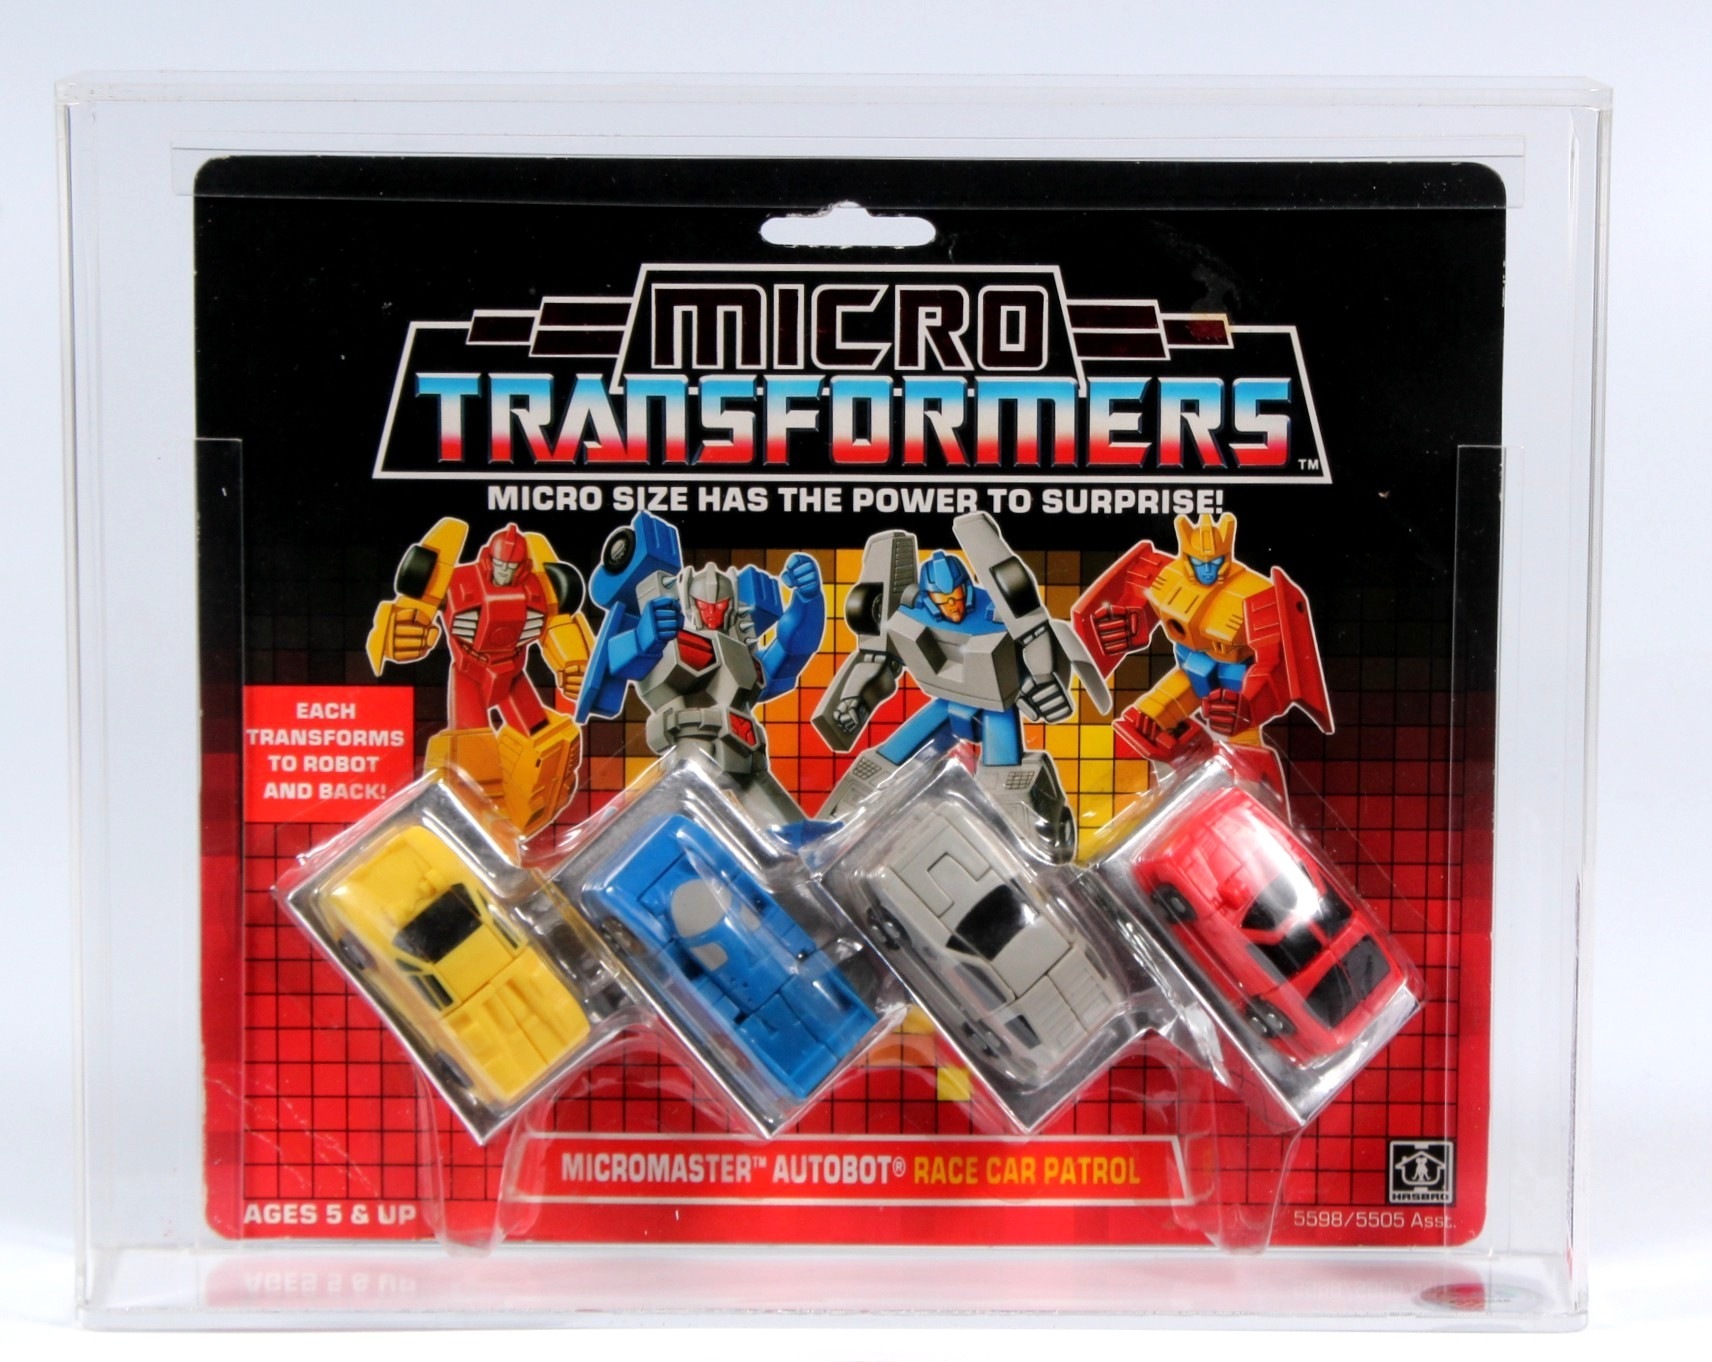 Микро действия. Трансформеры 1988. Трансформеры Micron micromasters6. Трансформеры микро Формат.